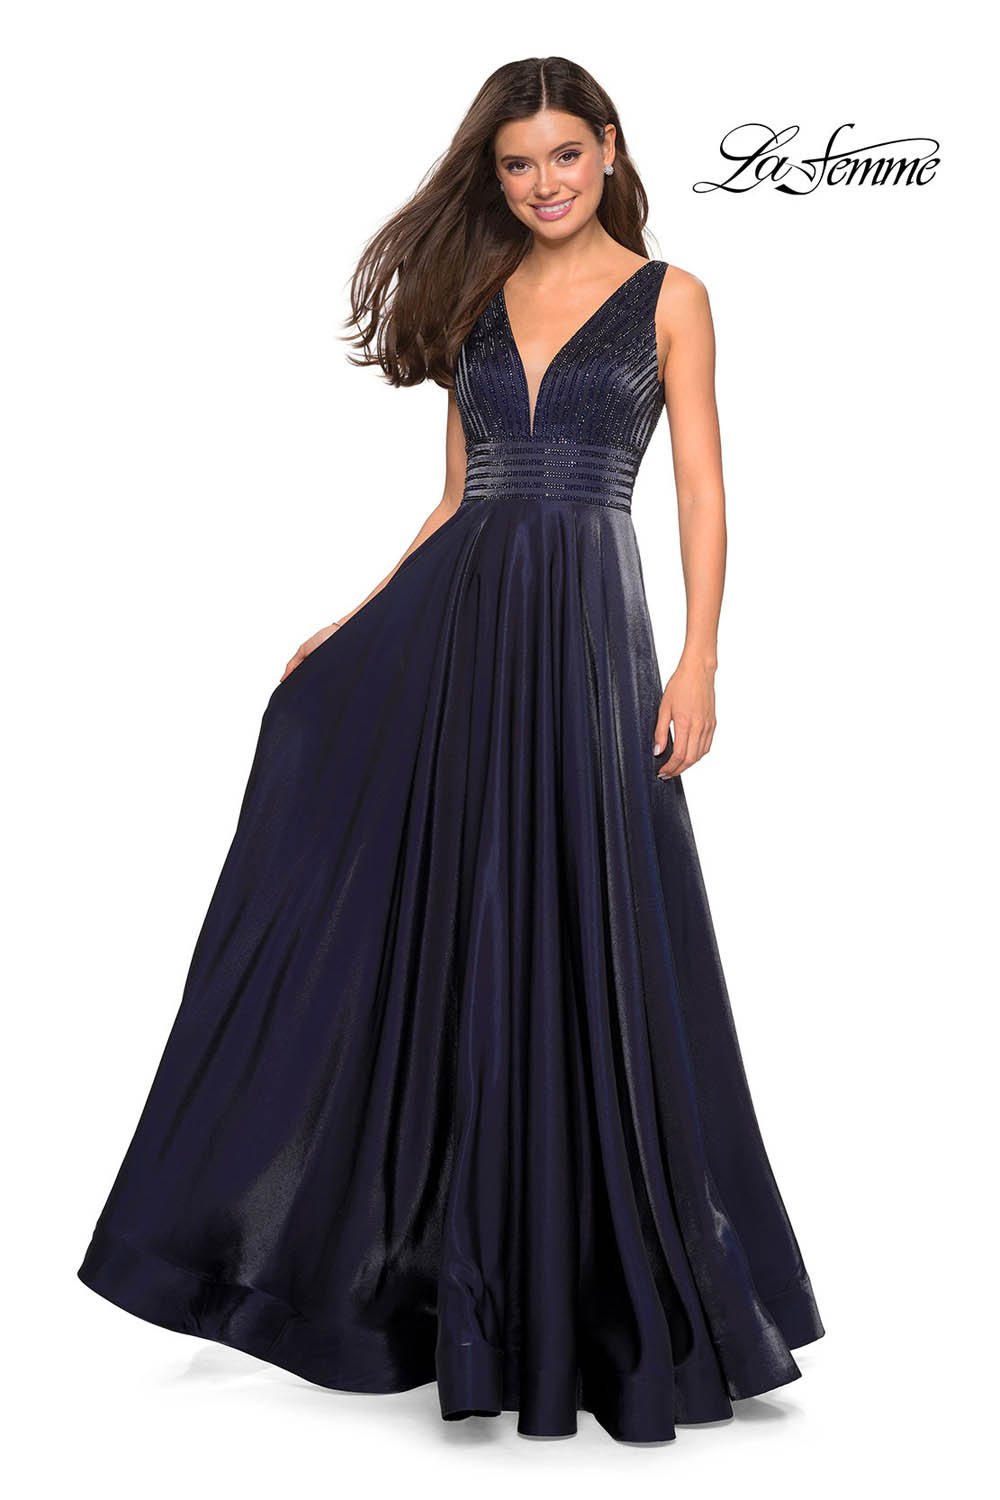 La Femme 27205 dress images in these colors: Blush, Burgundy, Navy, Platinum.